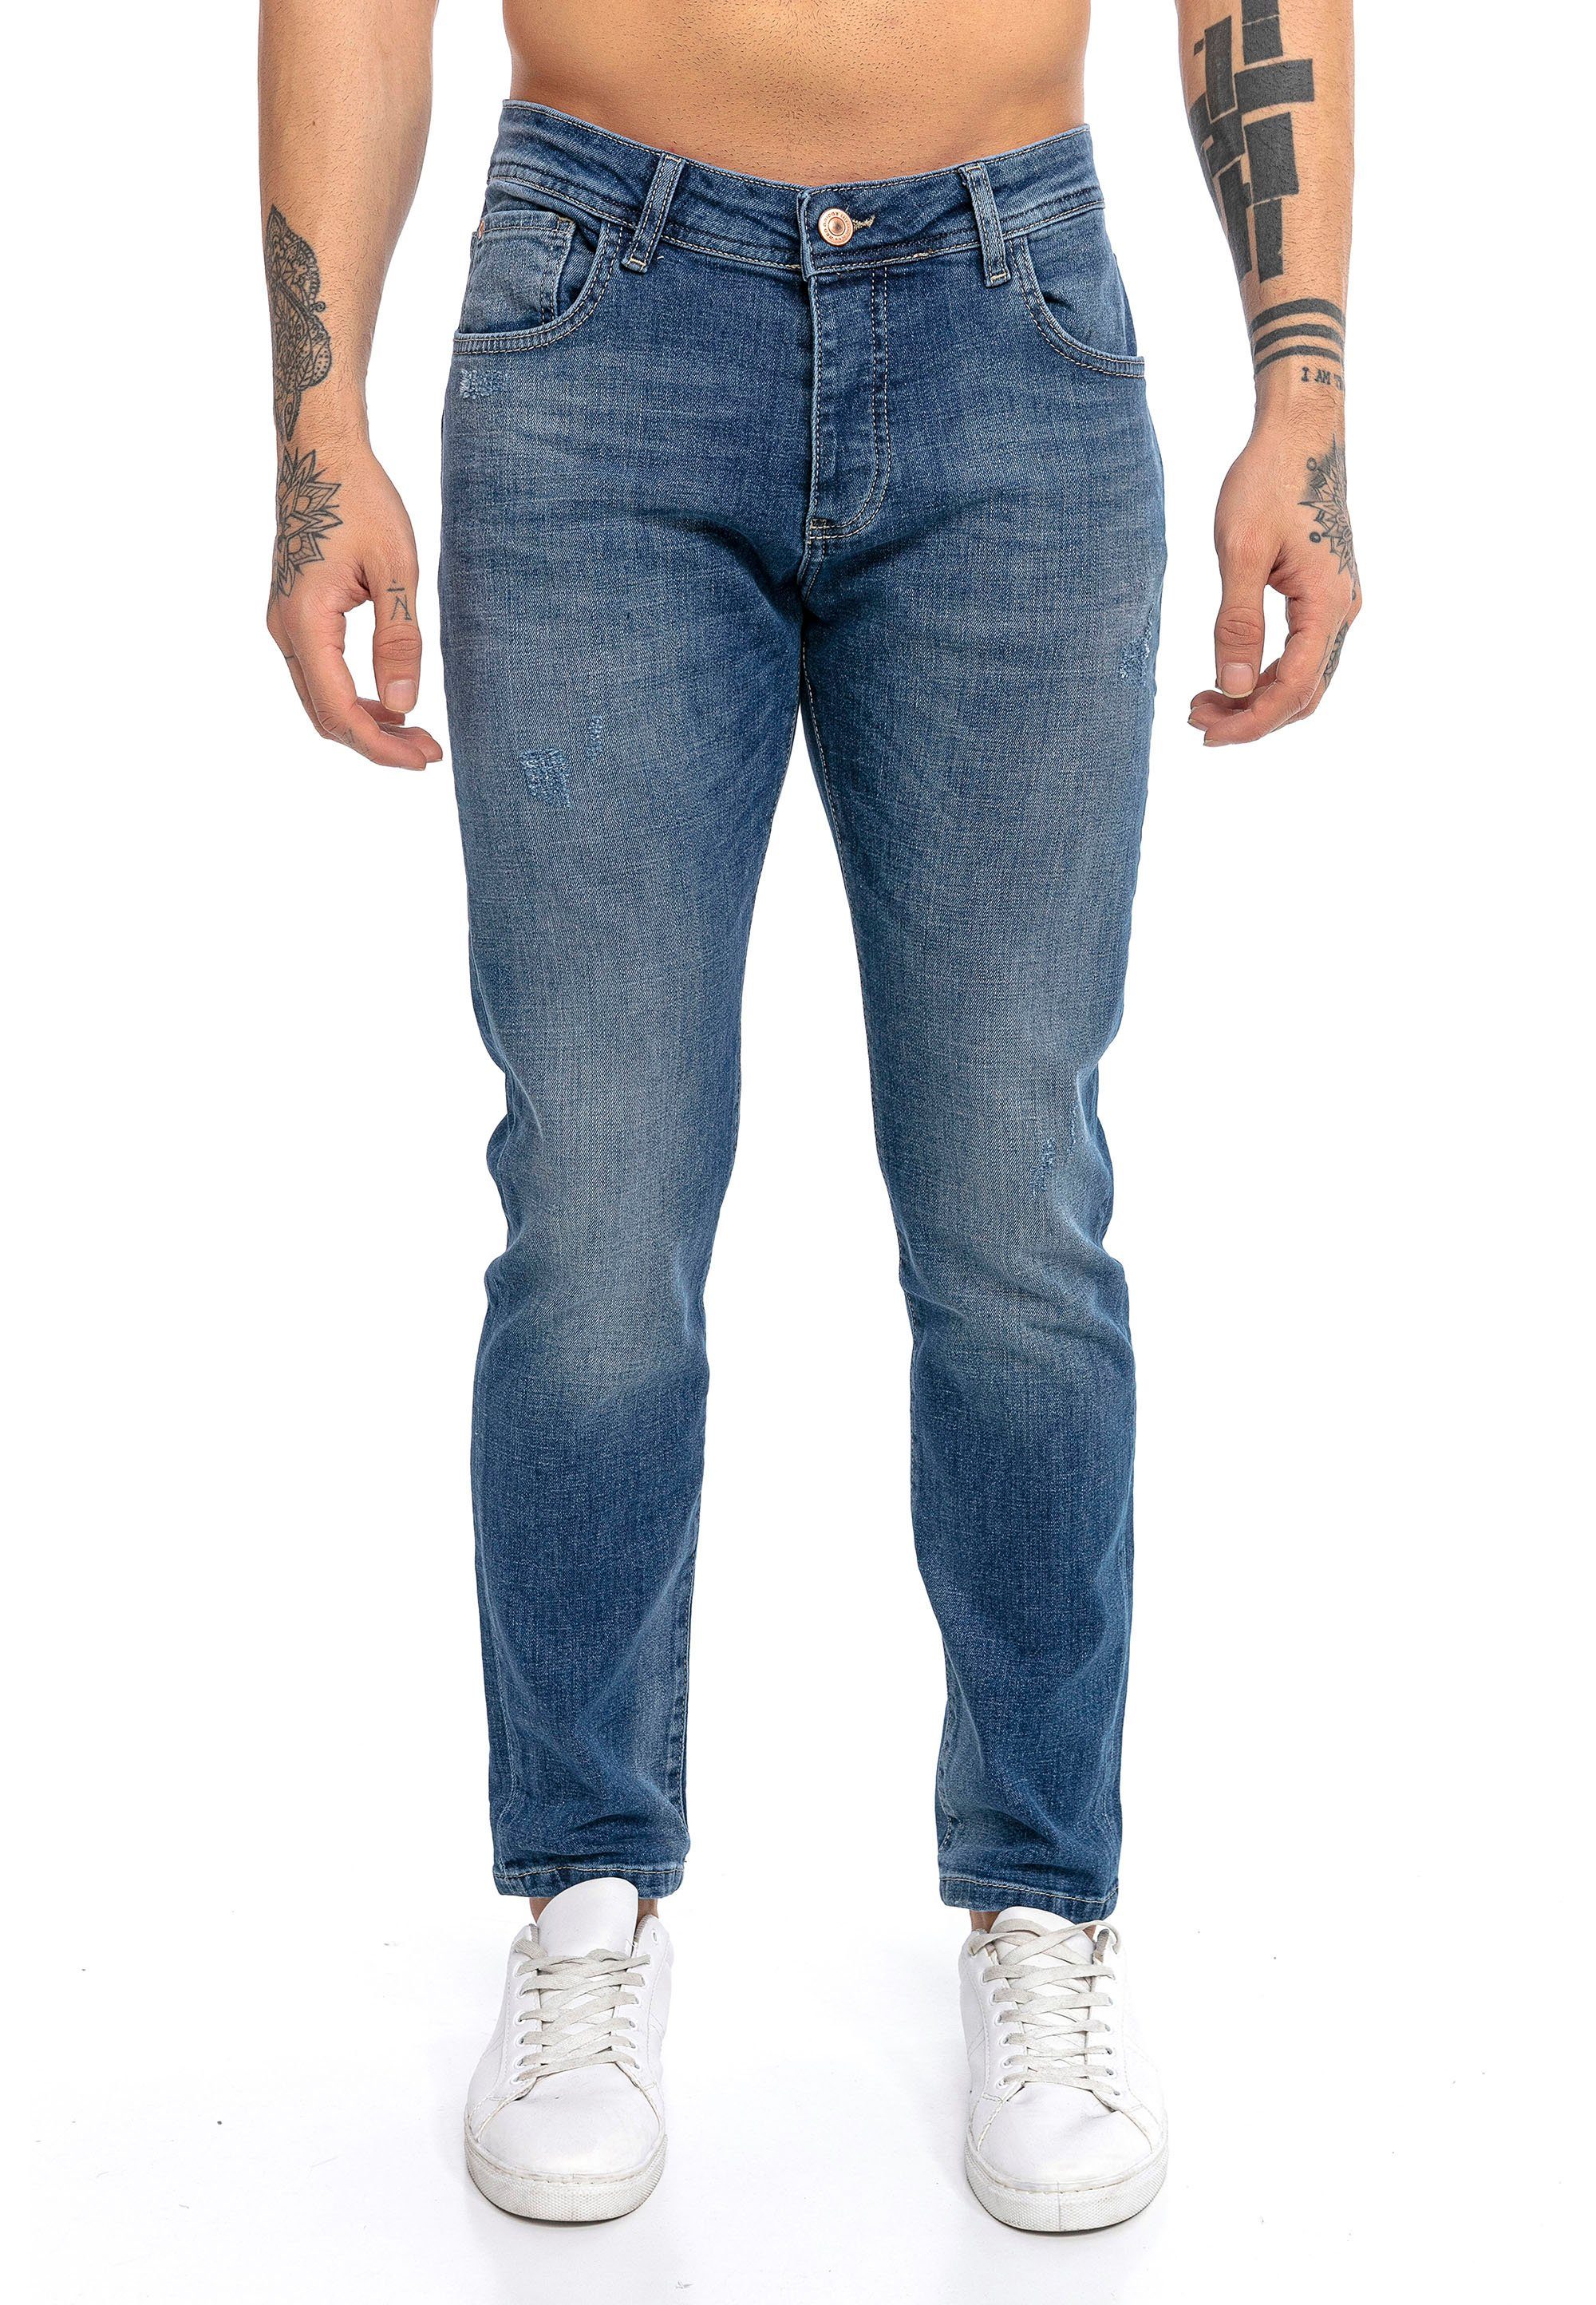 News Slim-fit-Jeans Wave RedBridge Waschung Newport cooler mit Faded